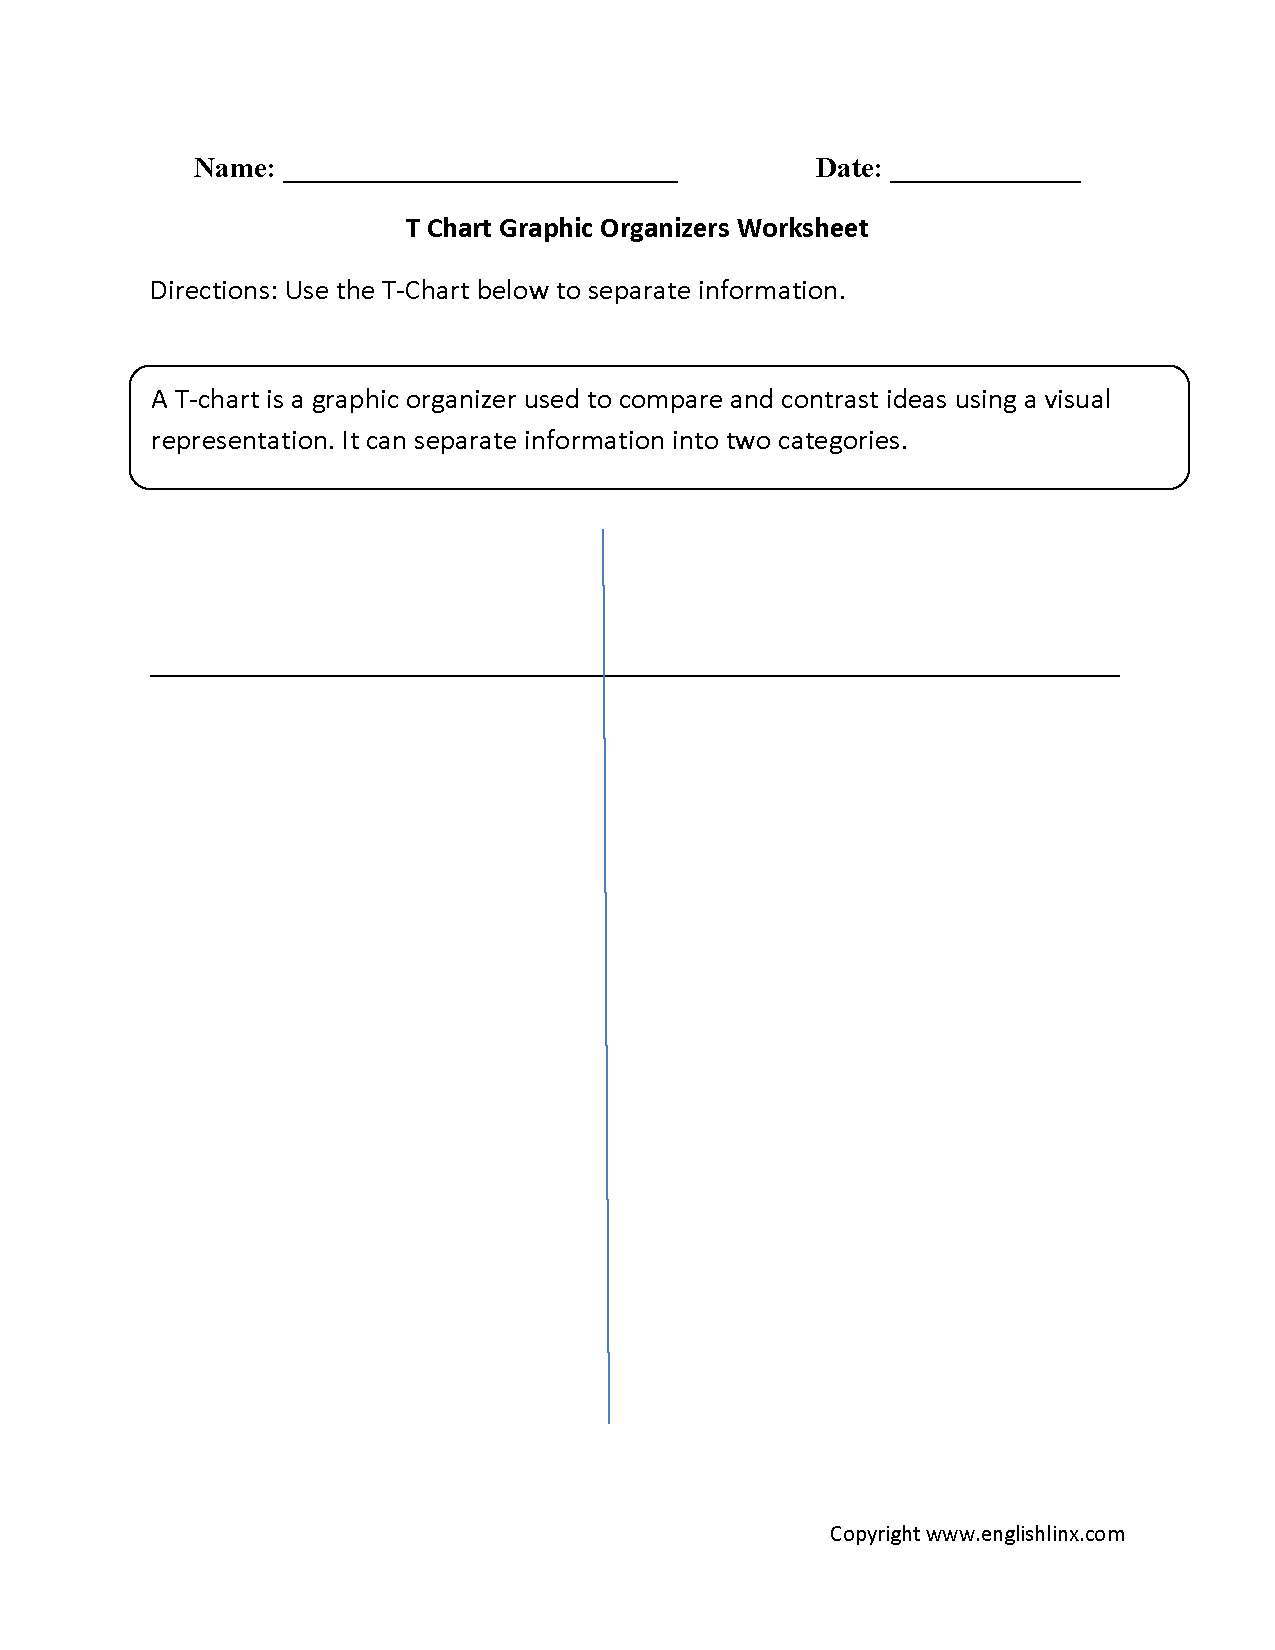 Englishlinx | Graphic Organizers Worksheets - Free Printable Main Idea Graphic Organizer